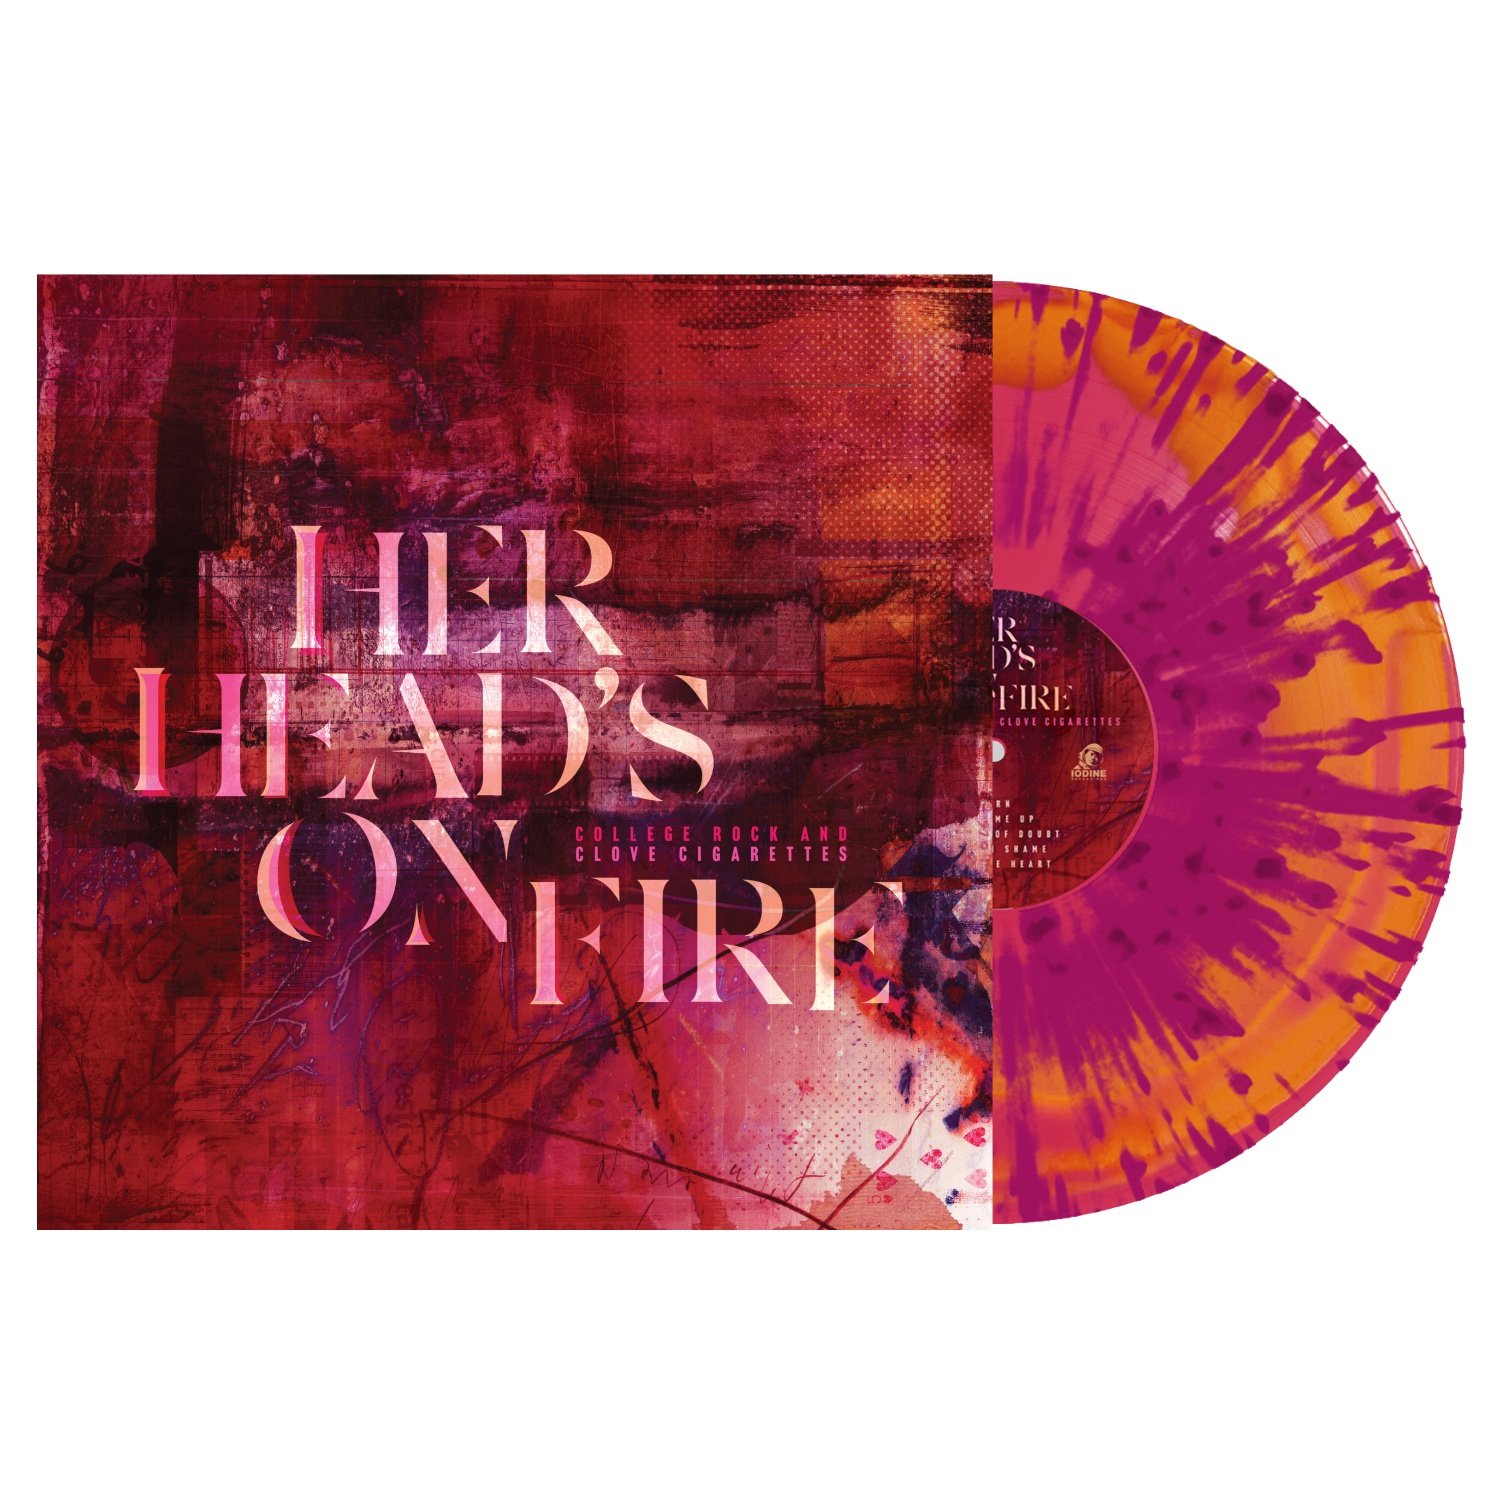 Her Head's On Fire - College Rock and Clove Cigarettes - Vinyl - New Swirl : Splatter.jpg